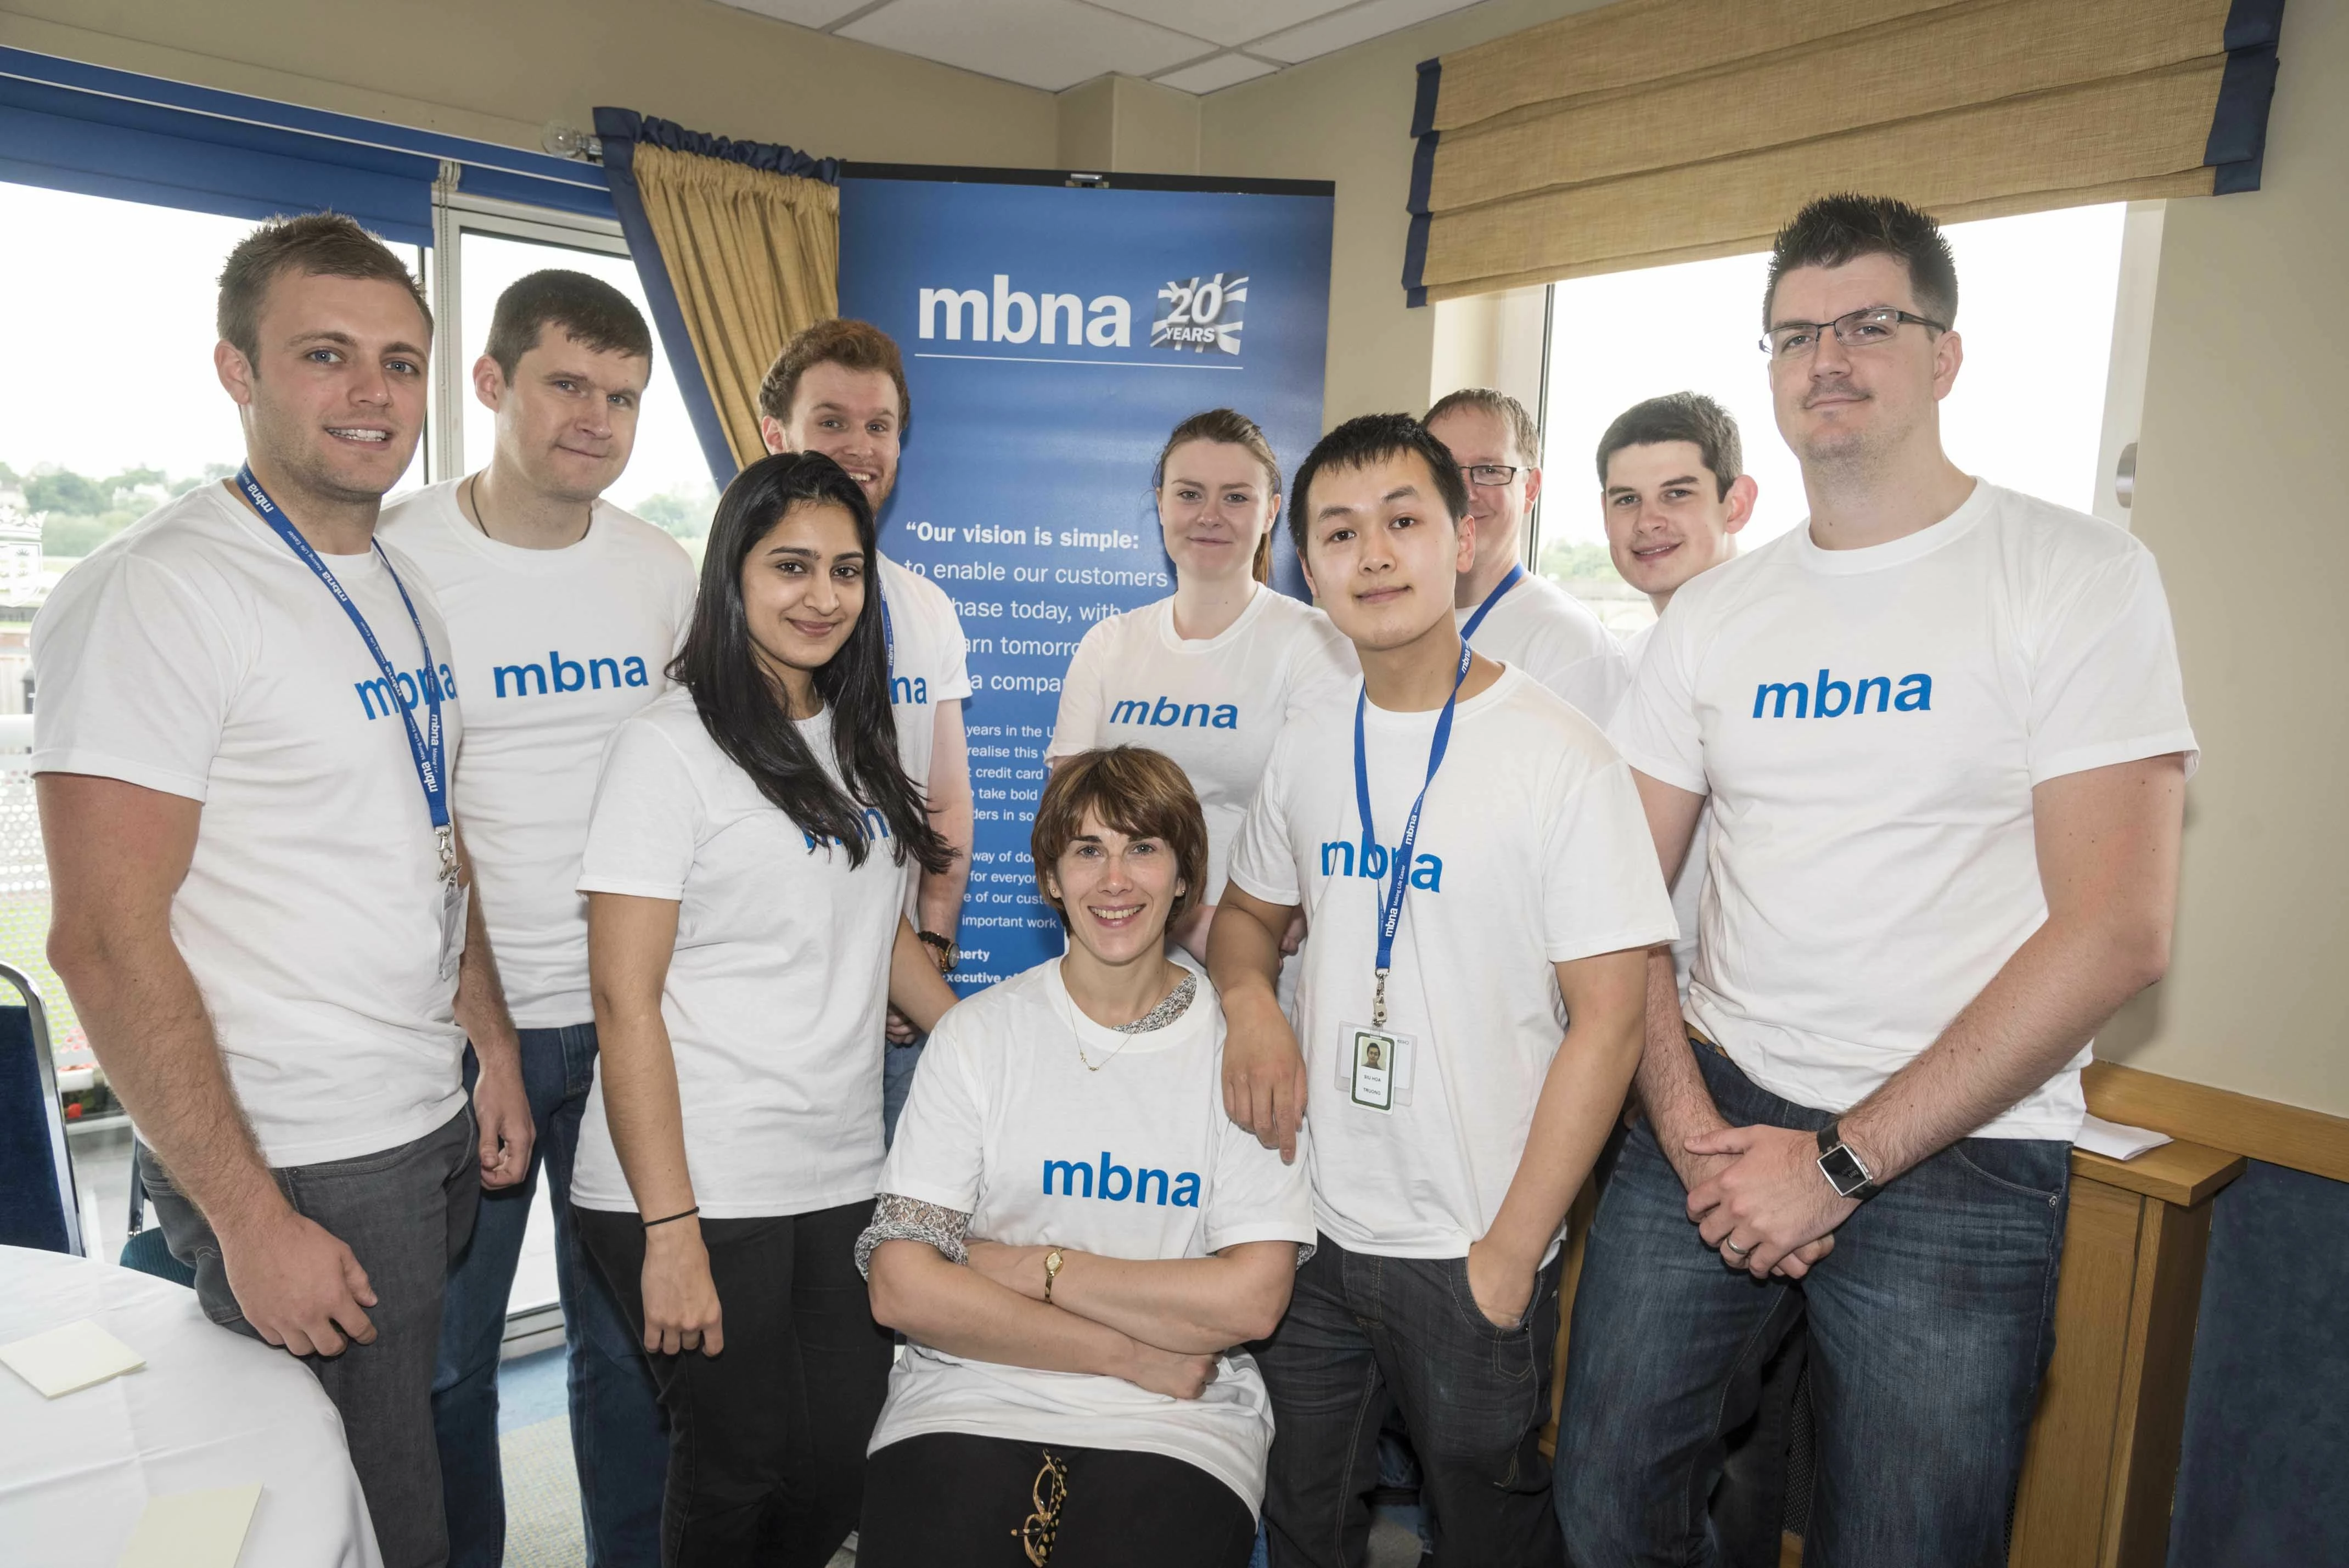 The MBNA team (from left to right): Jonathan Cheers, Matthew Dowsett, Simandeep Ghattaura, Adam Pool